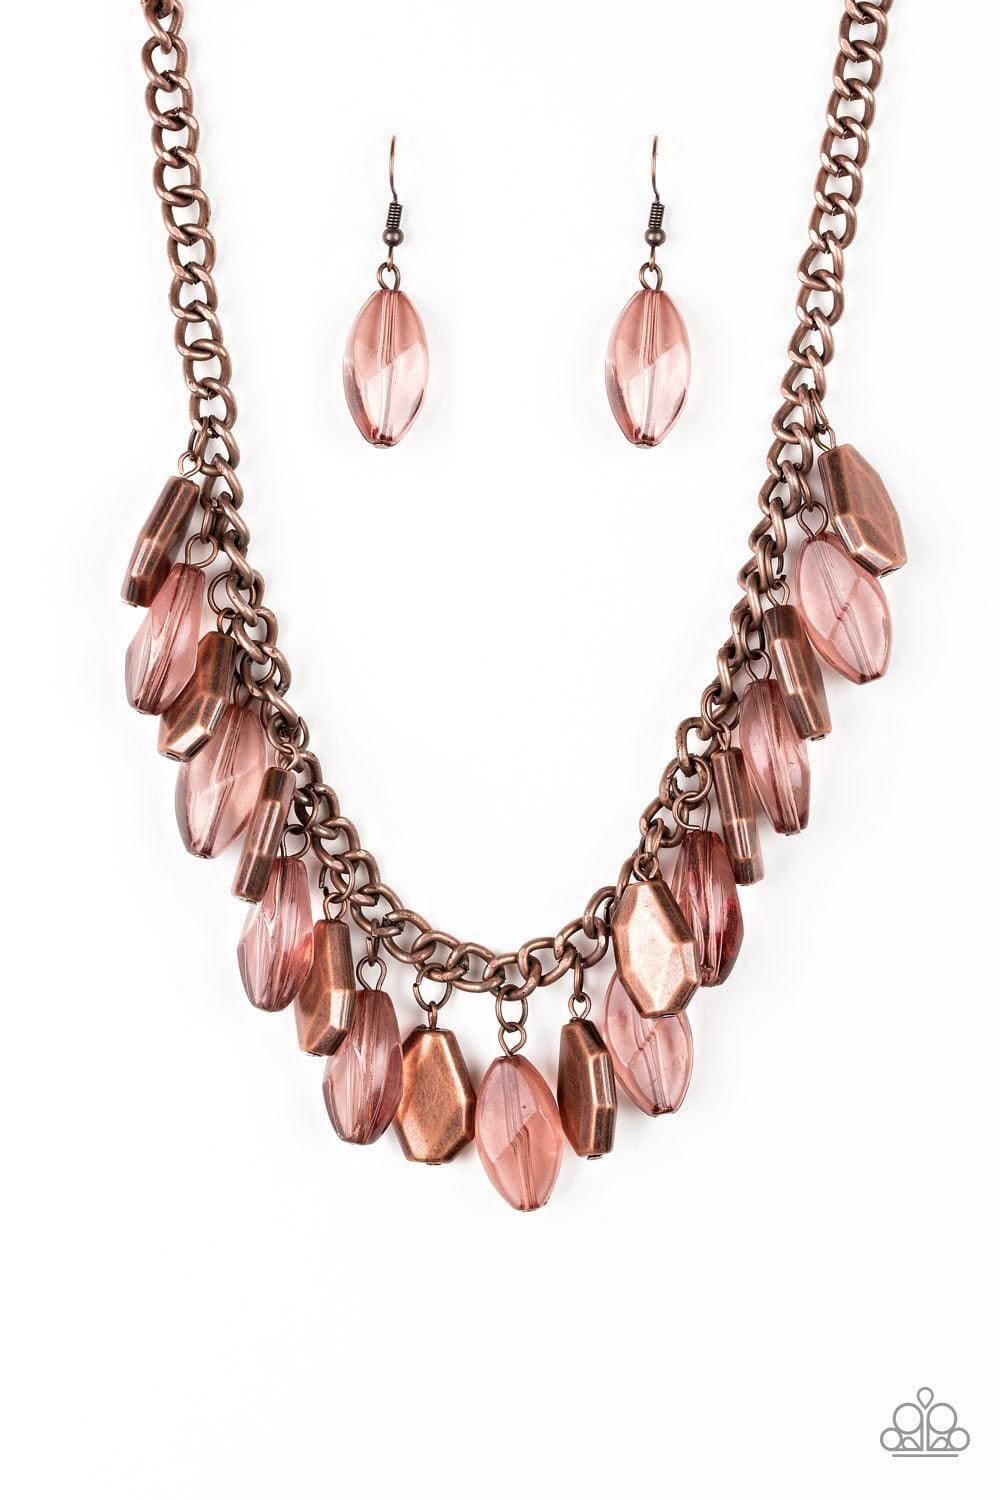 Paparazzi Accessories - Fringe Fabulous - Copper Necklace - Bling by JessieK